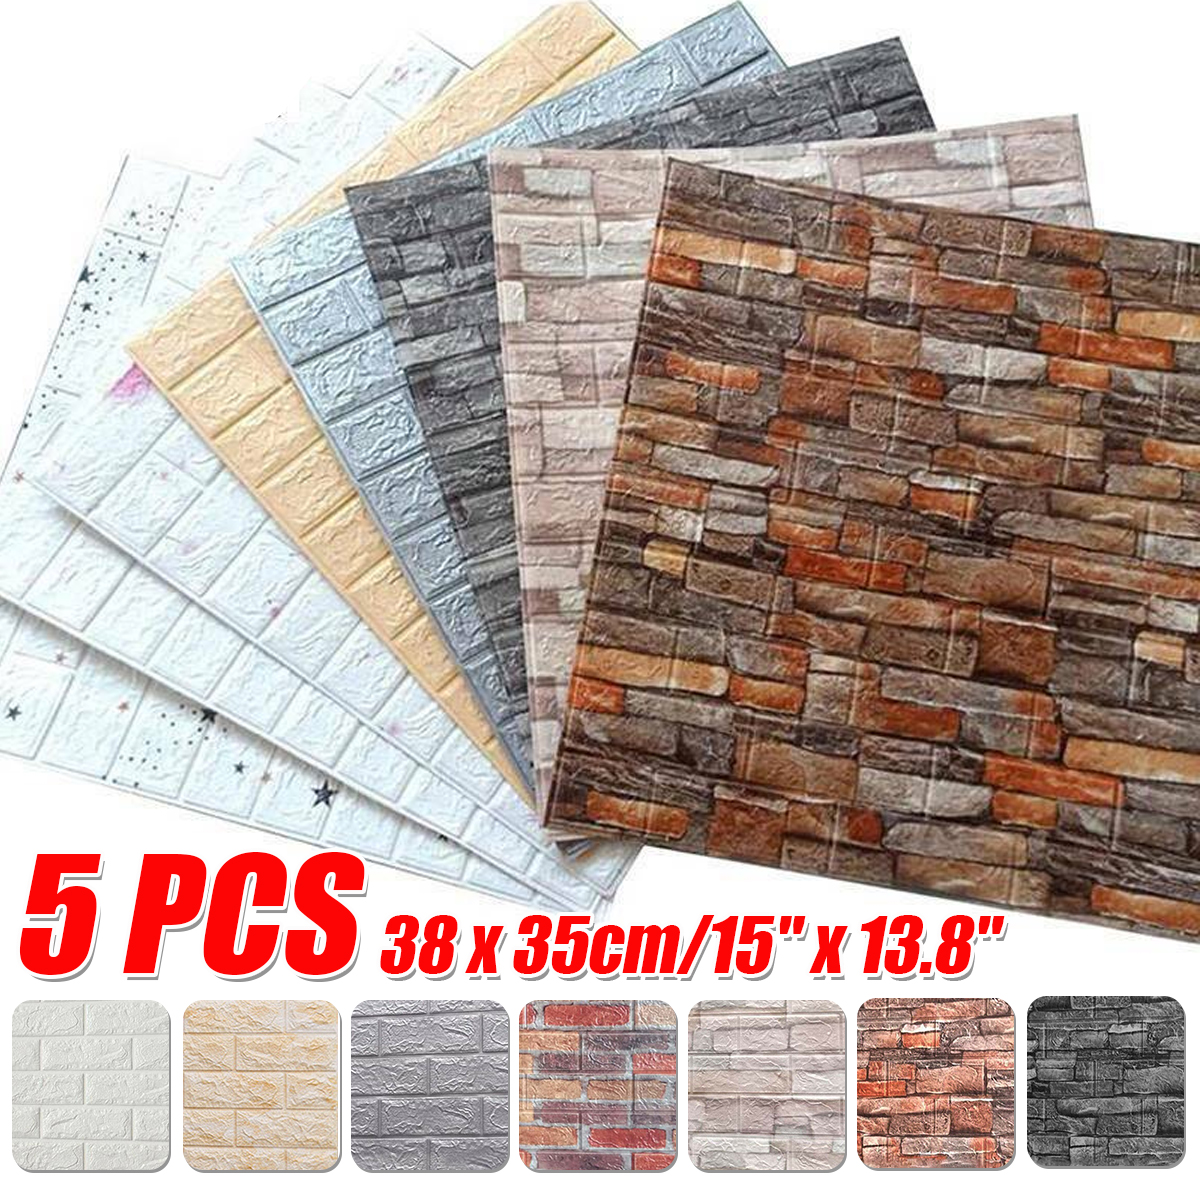 5Pcs-3D-Soft-Tile-Brick-Wall-Sticker-Self-adhesive-Waterproof-Foam-Panel-3835cm-1822540-1